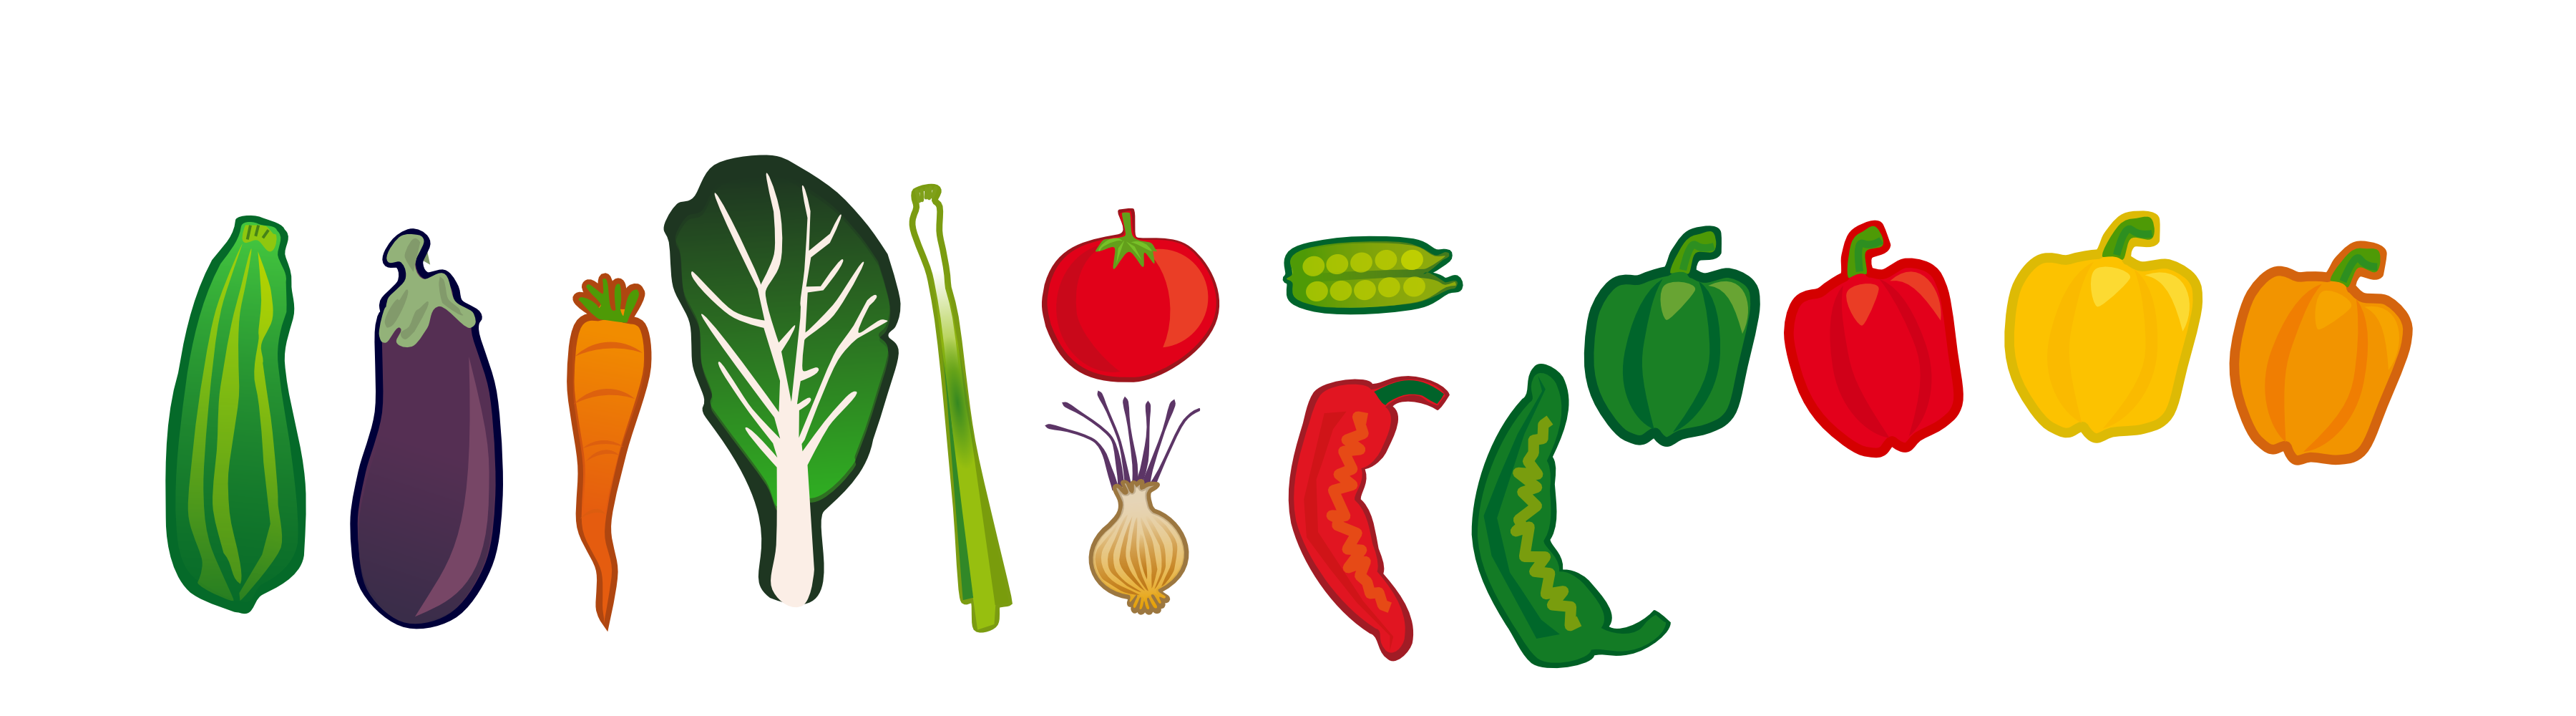 vegetables clip art free download - photo #40